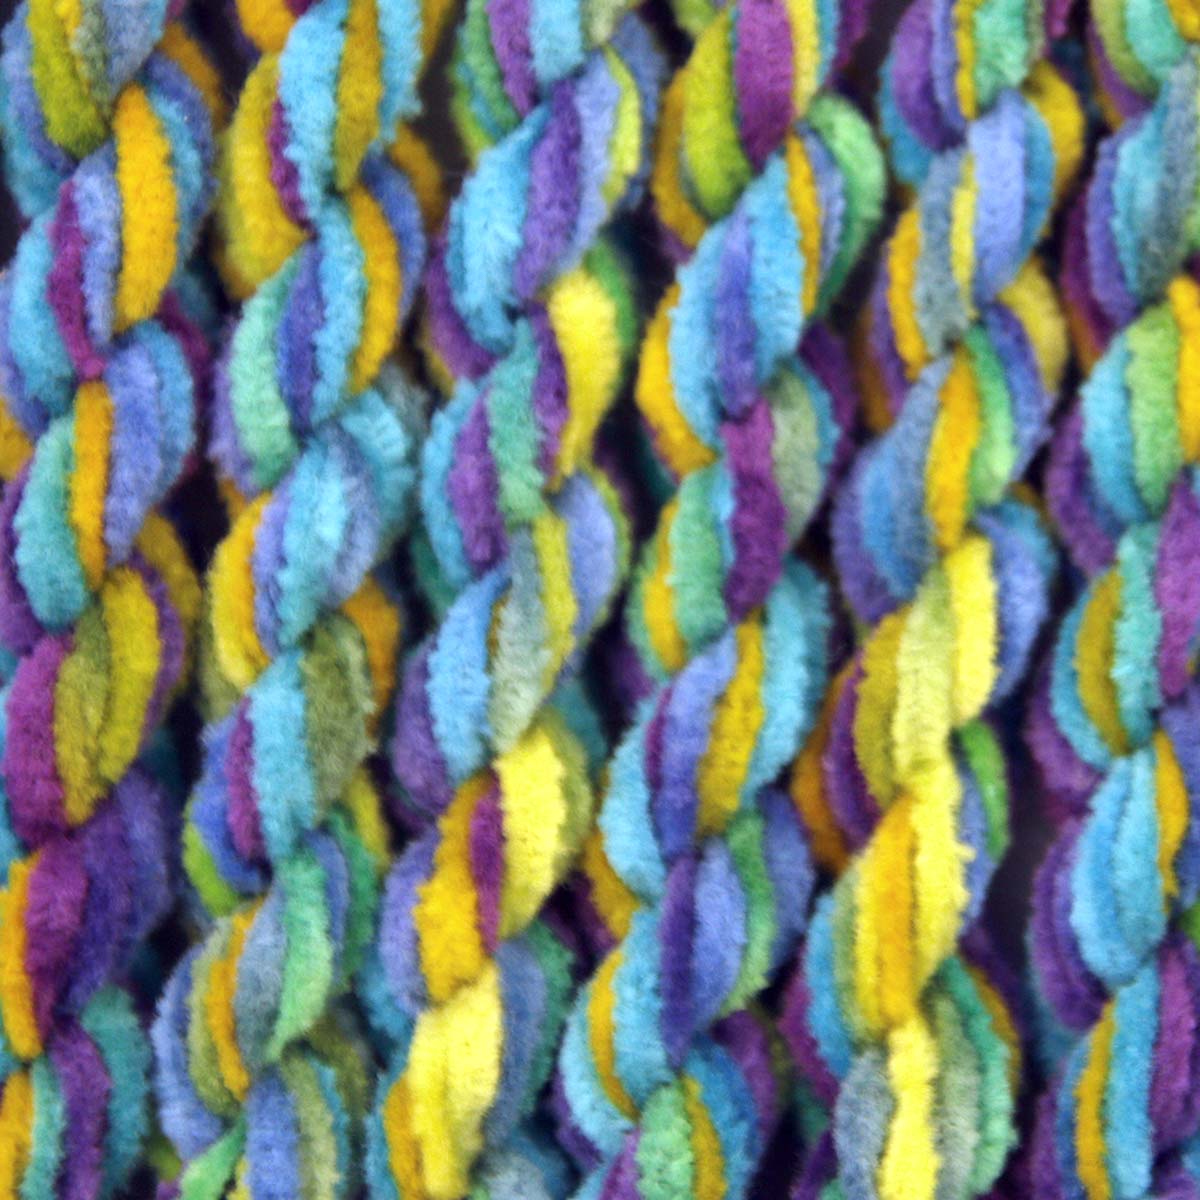 www.colourstreams.com.au Colour Streams Hand Dyed Chenille Threads Slow Stitch Embroidery Textile Arts Fibre DL 14 Monet Purples Greens Blues Golds